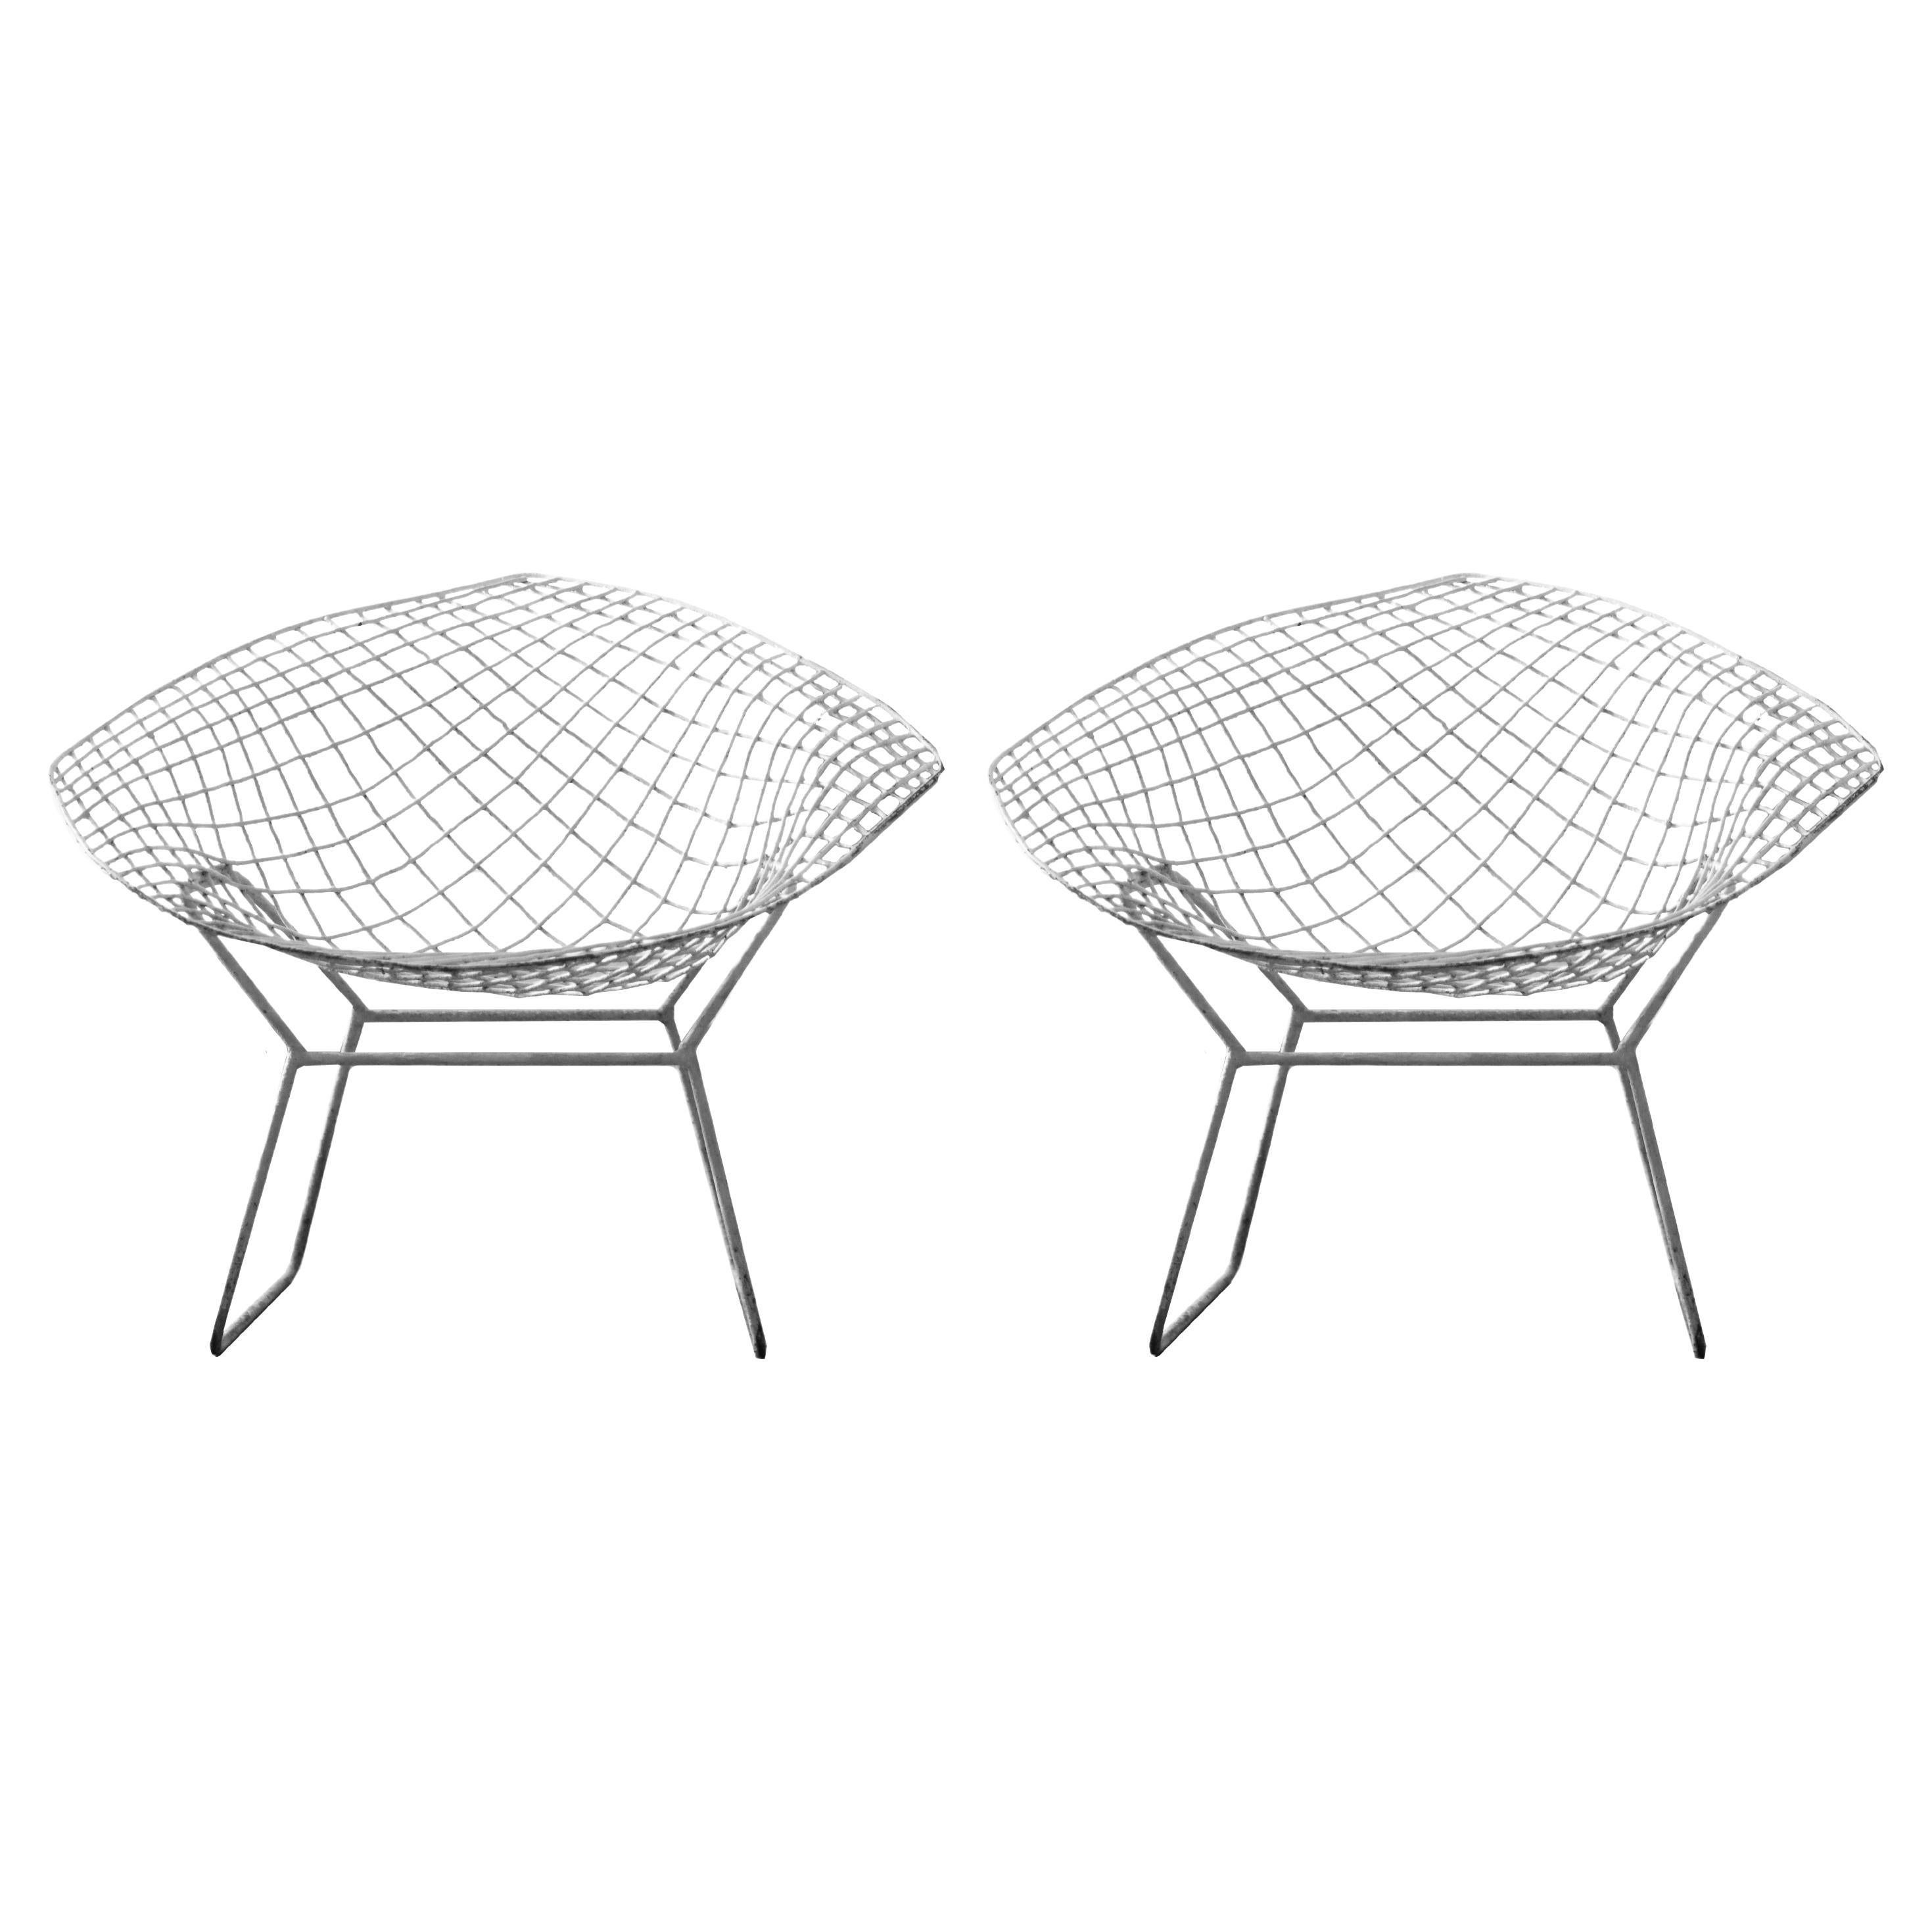 "Diamond" Chairs by Harry Bertoia 'Set of 2'